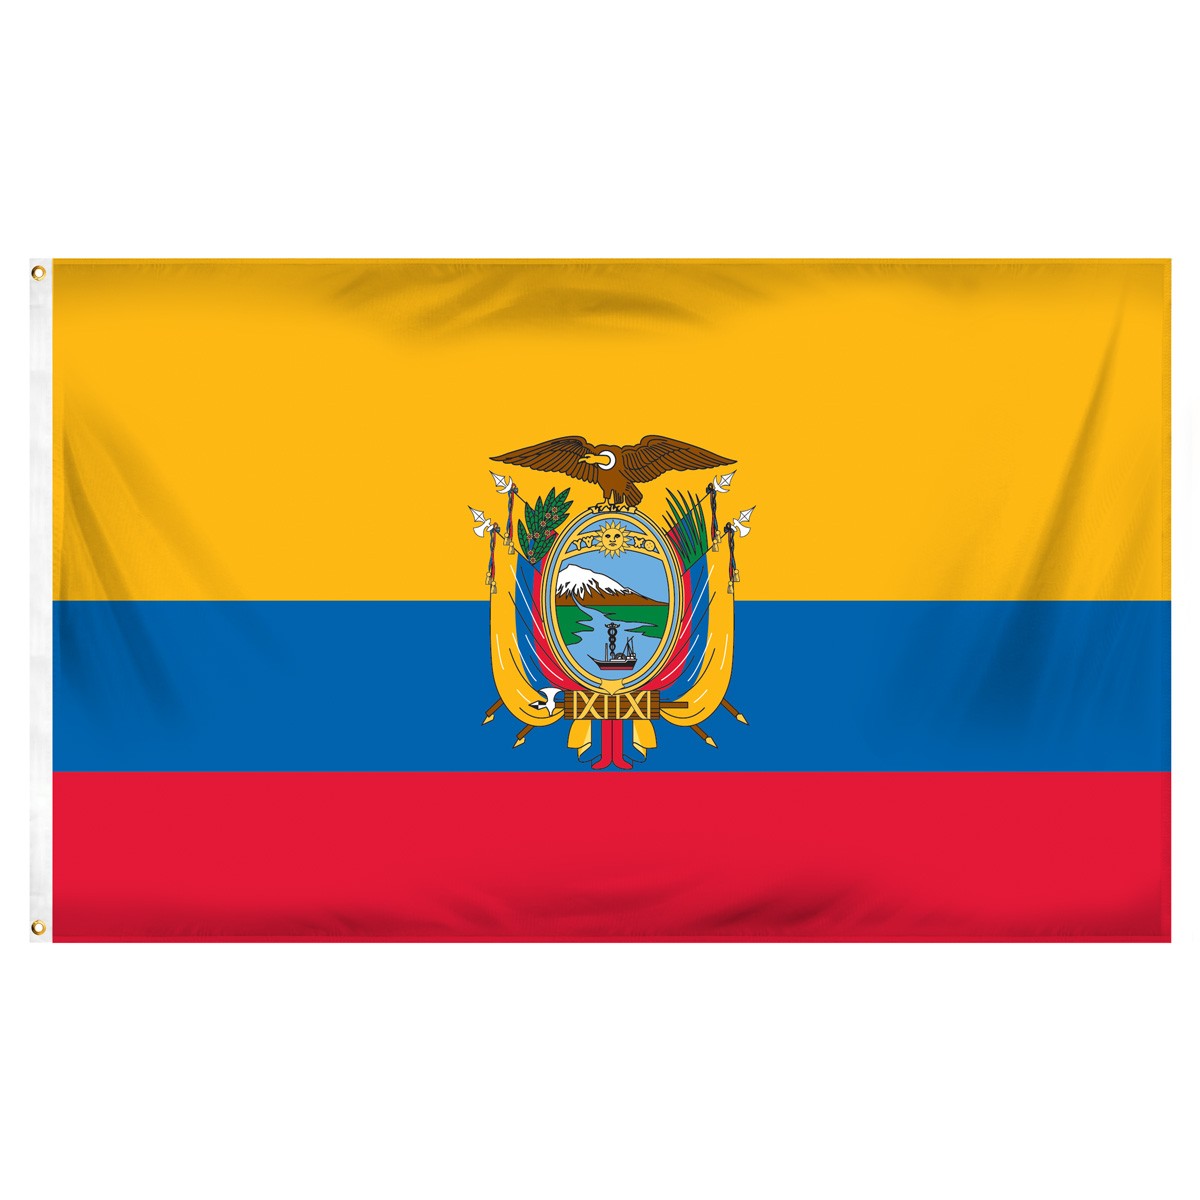 Ecuador Building Pennants and Flags